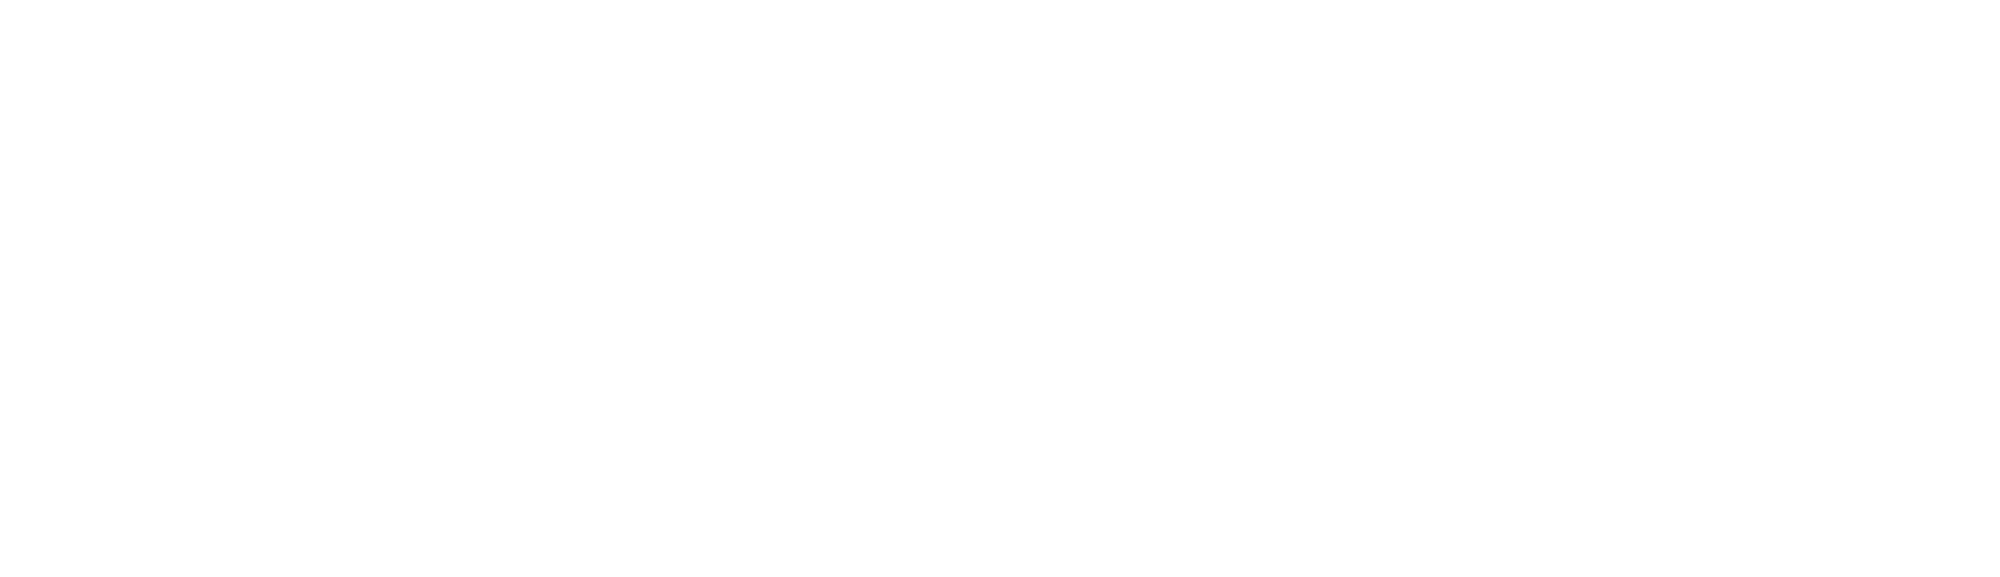 Rail Freight Corridor 9